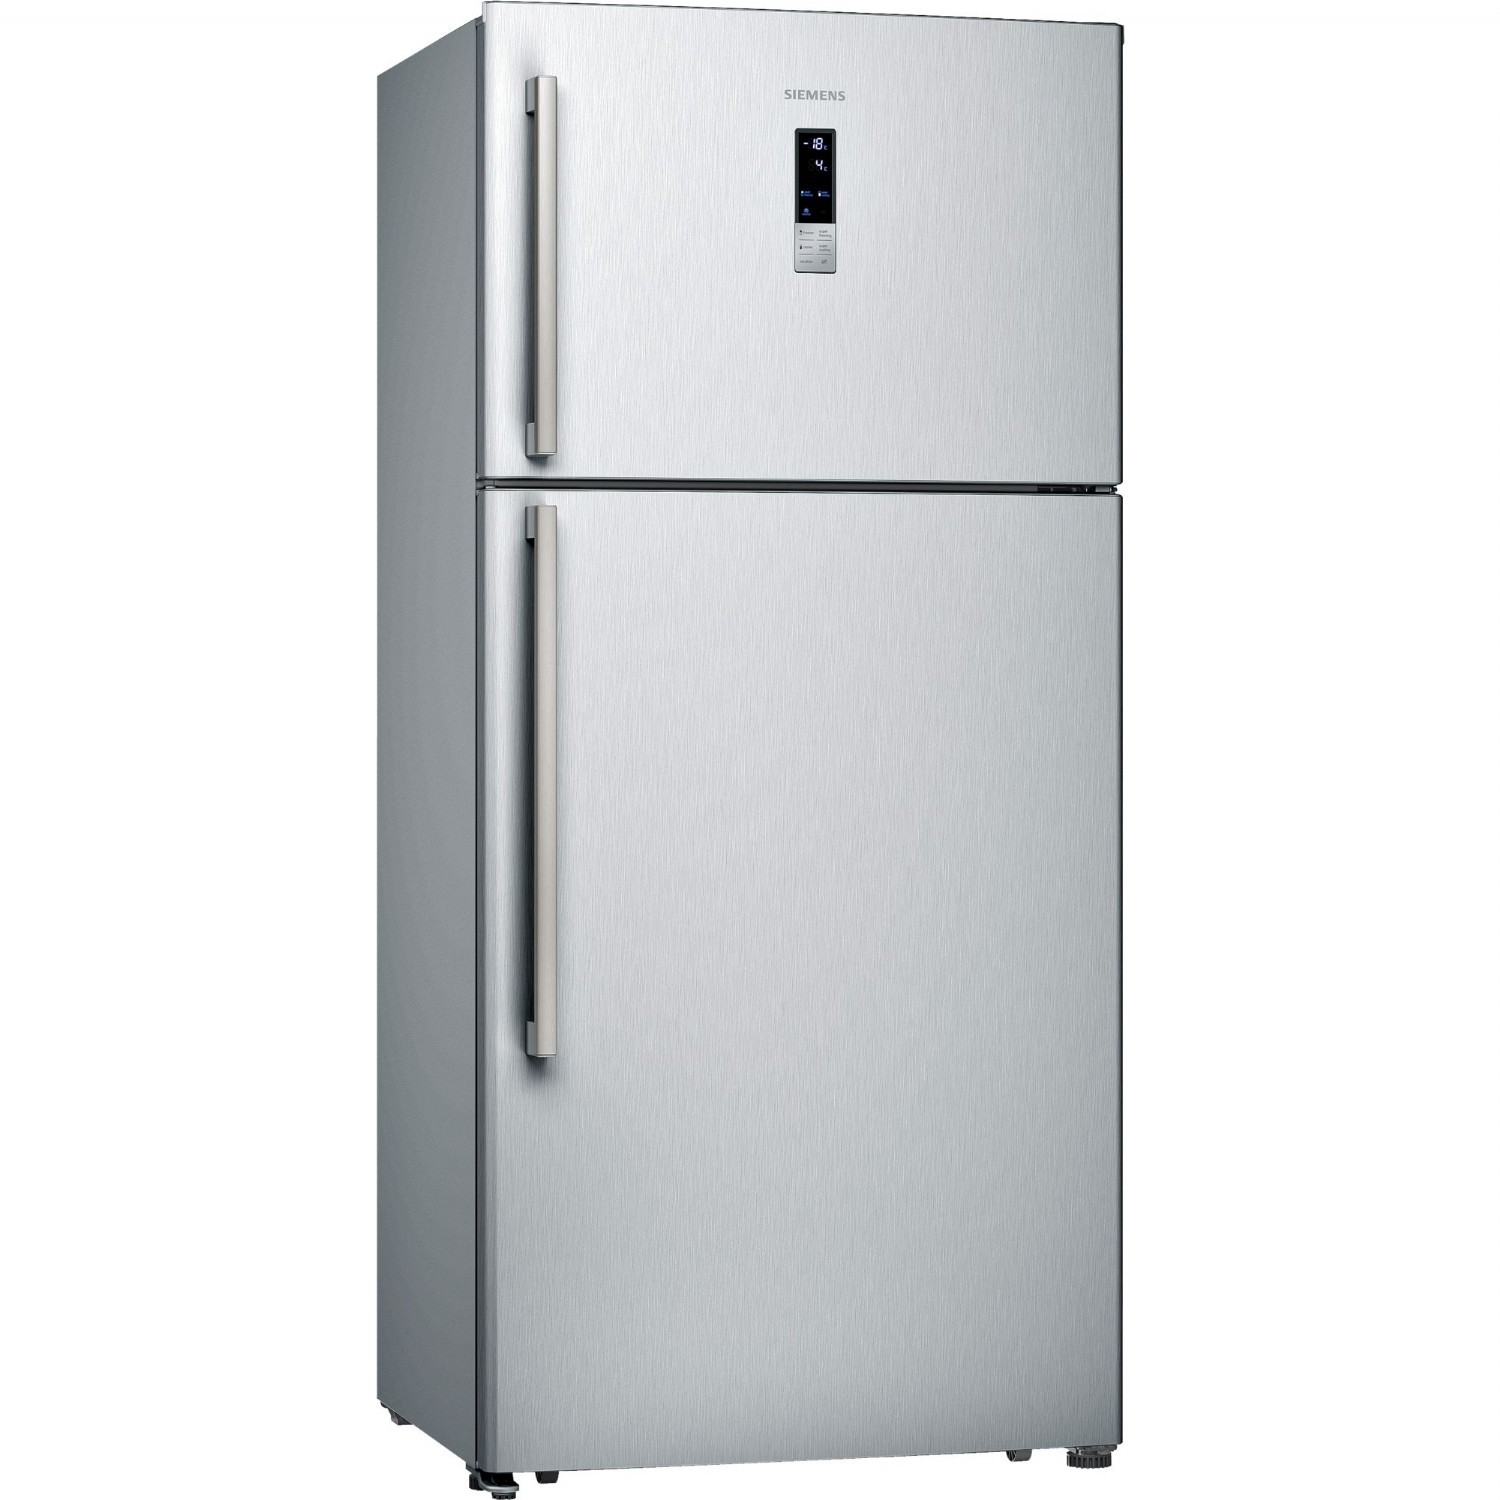 Buzdolabı | Siemens KD65NVI20N A+ Üstten Donduruculu No-Frost Buzdolabı | KD65NVI20N | KD65NVI20N, kd65nvı20n, kd65nvi20n, Siemens KD65NVI20N No-Frost Buzdolabı, Siemens KD65NVI20N Buzdolabı | 